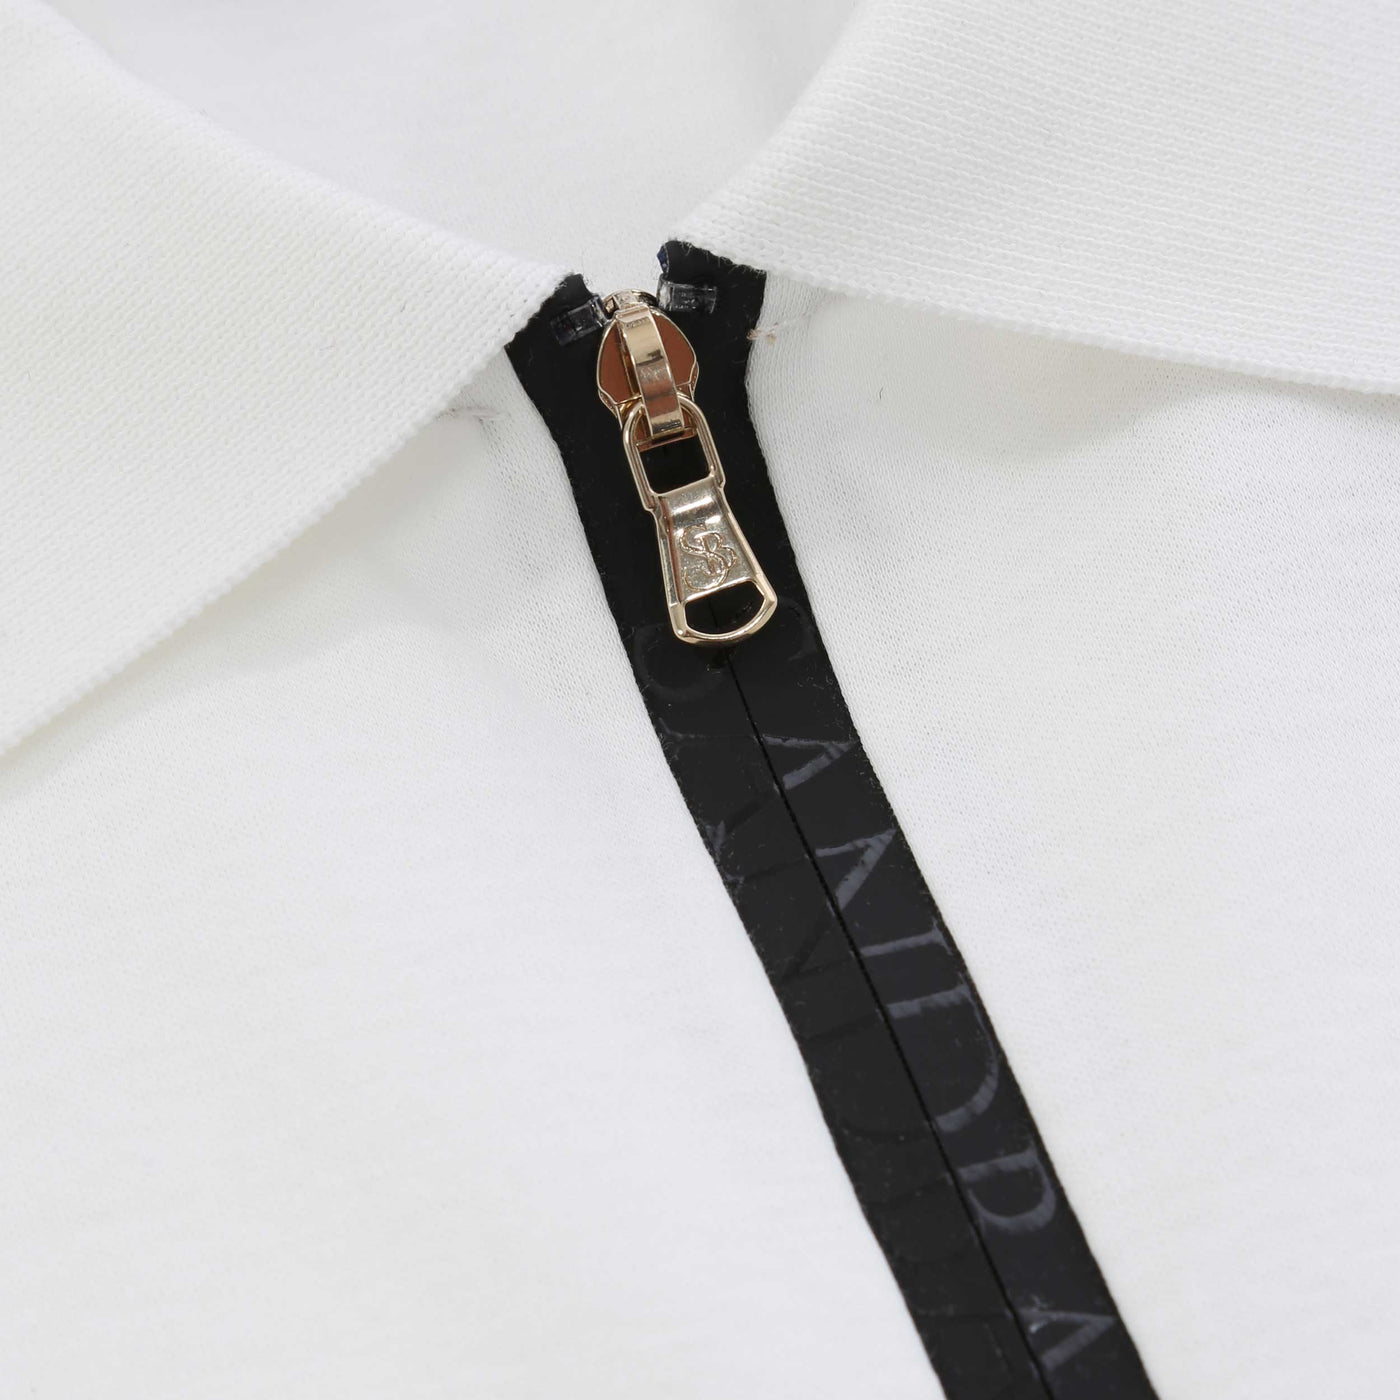 Sandbanks Silicone Zip Polo Shirt in White Zip